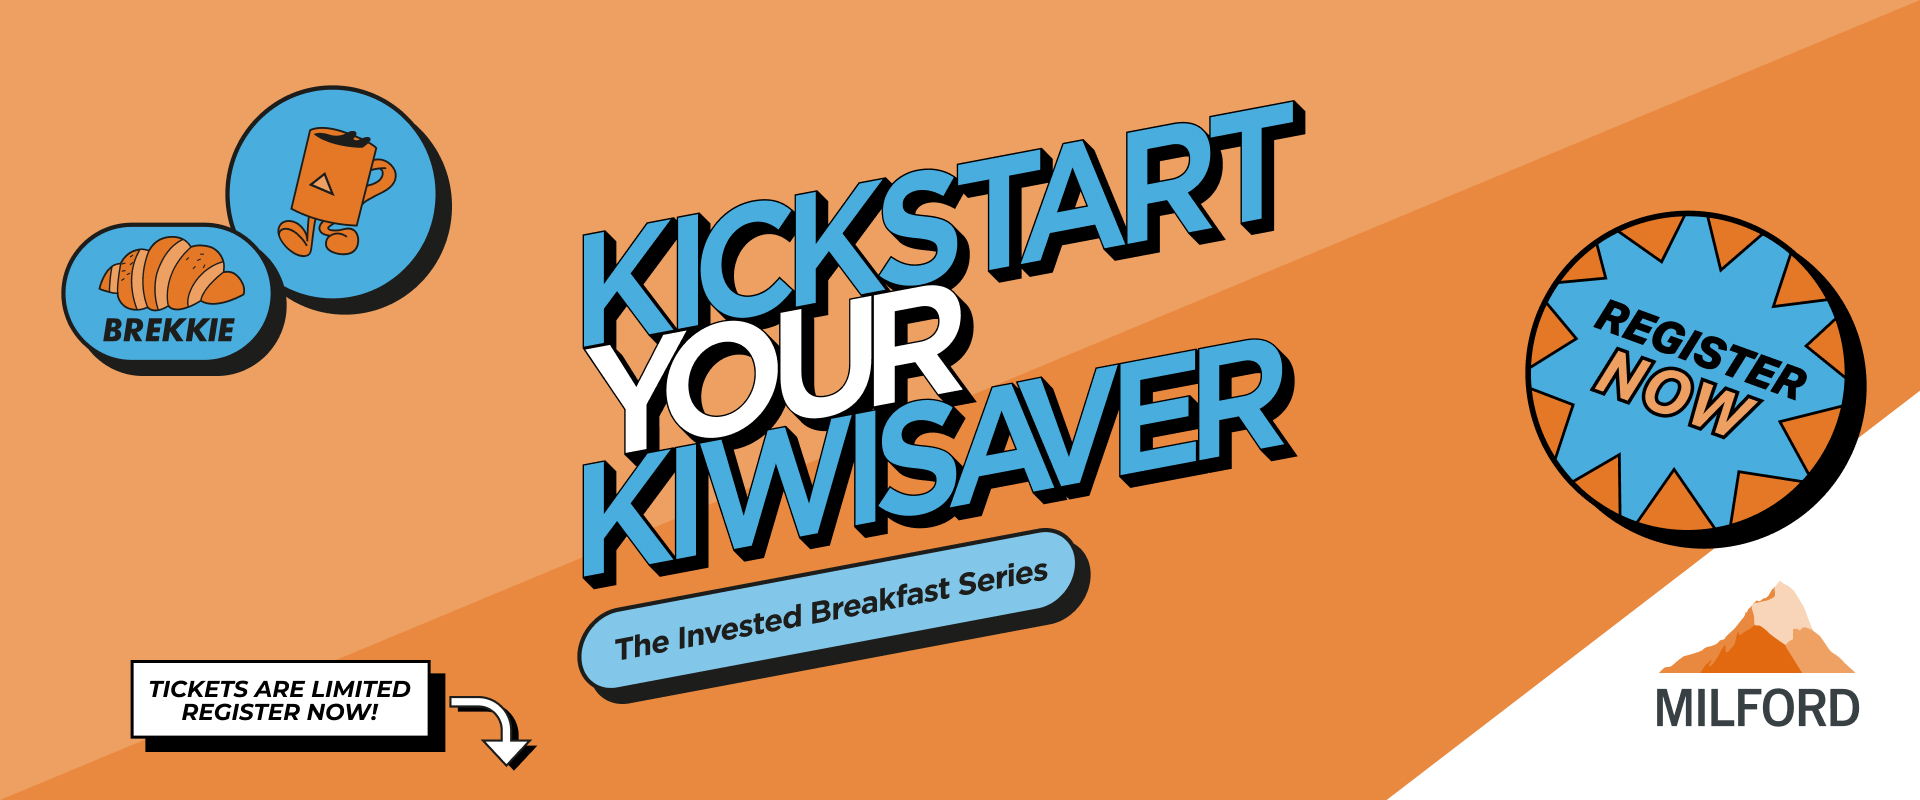 Milford KiwiSaver Kickstart Events